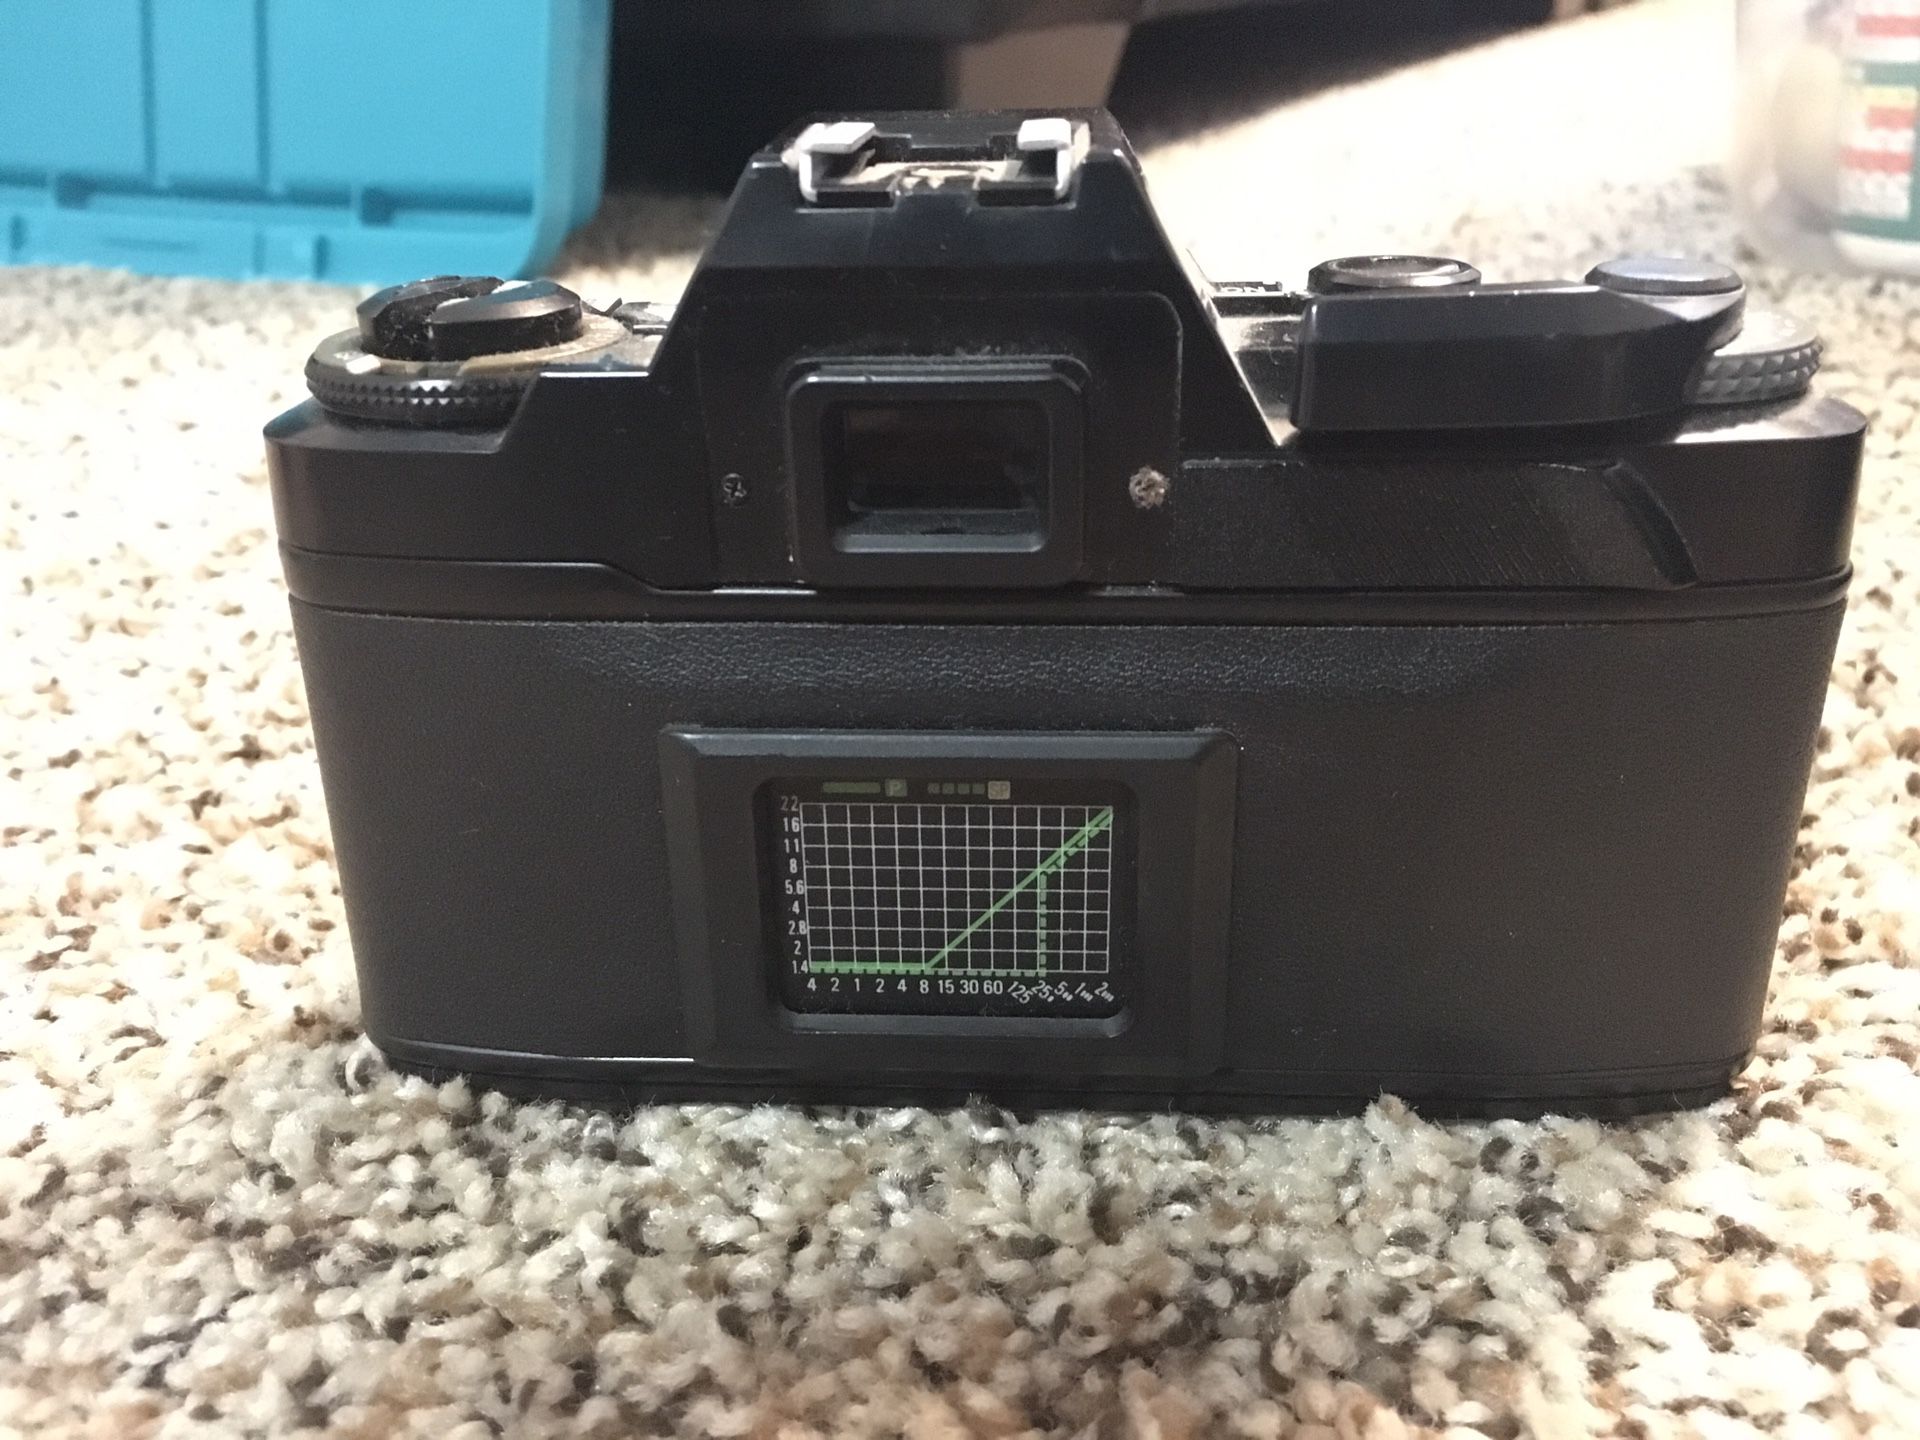 Ricoh film camera with: Zoom lens, 1 film,Bag, flash, and extra lens